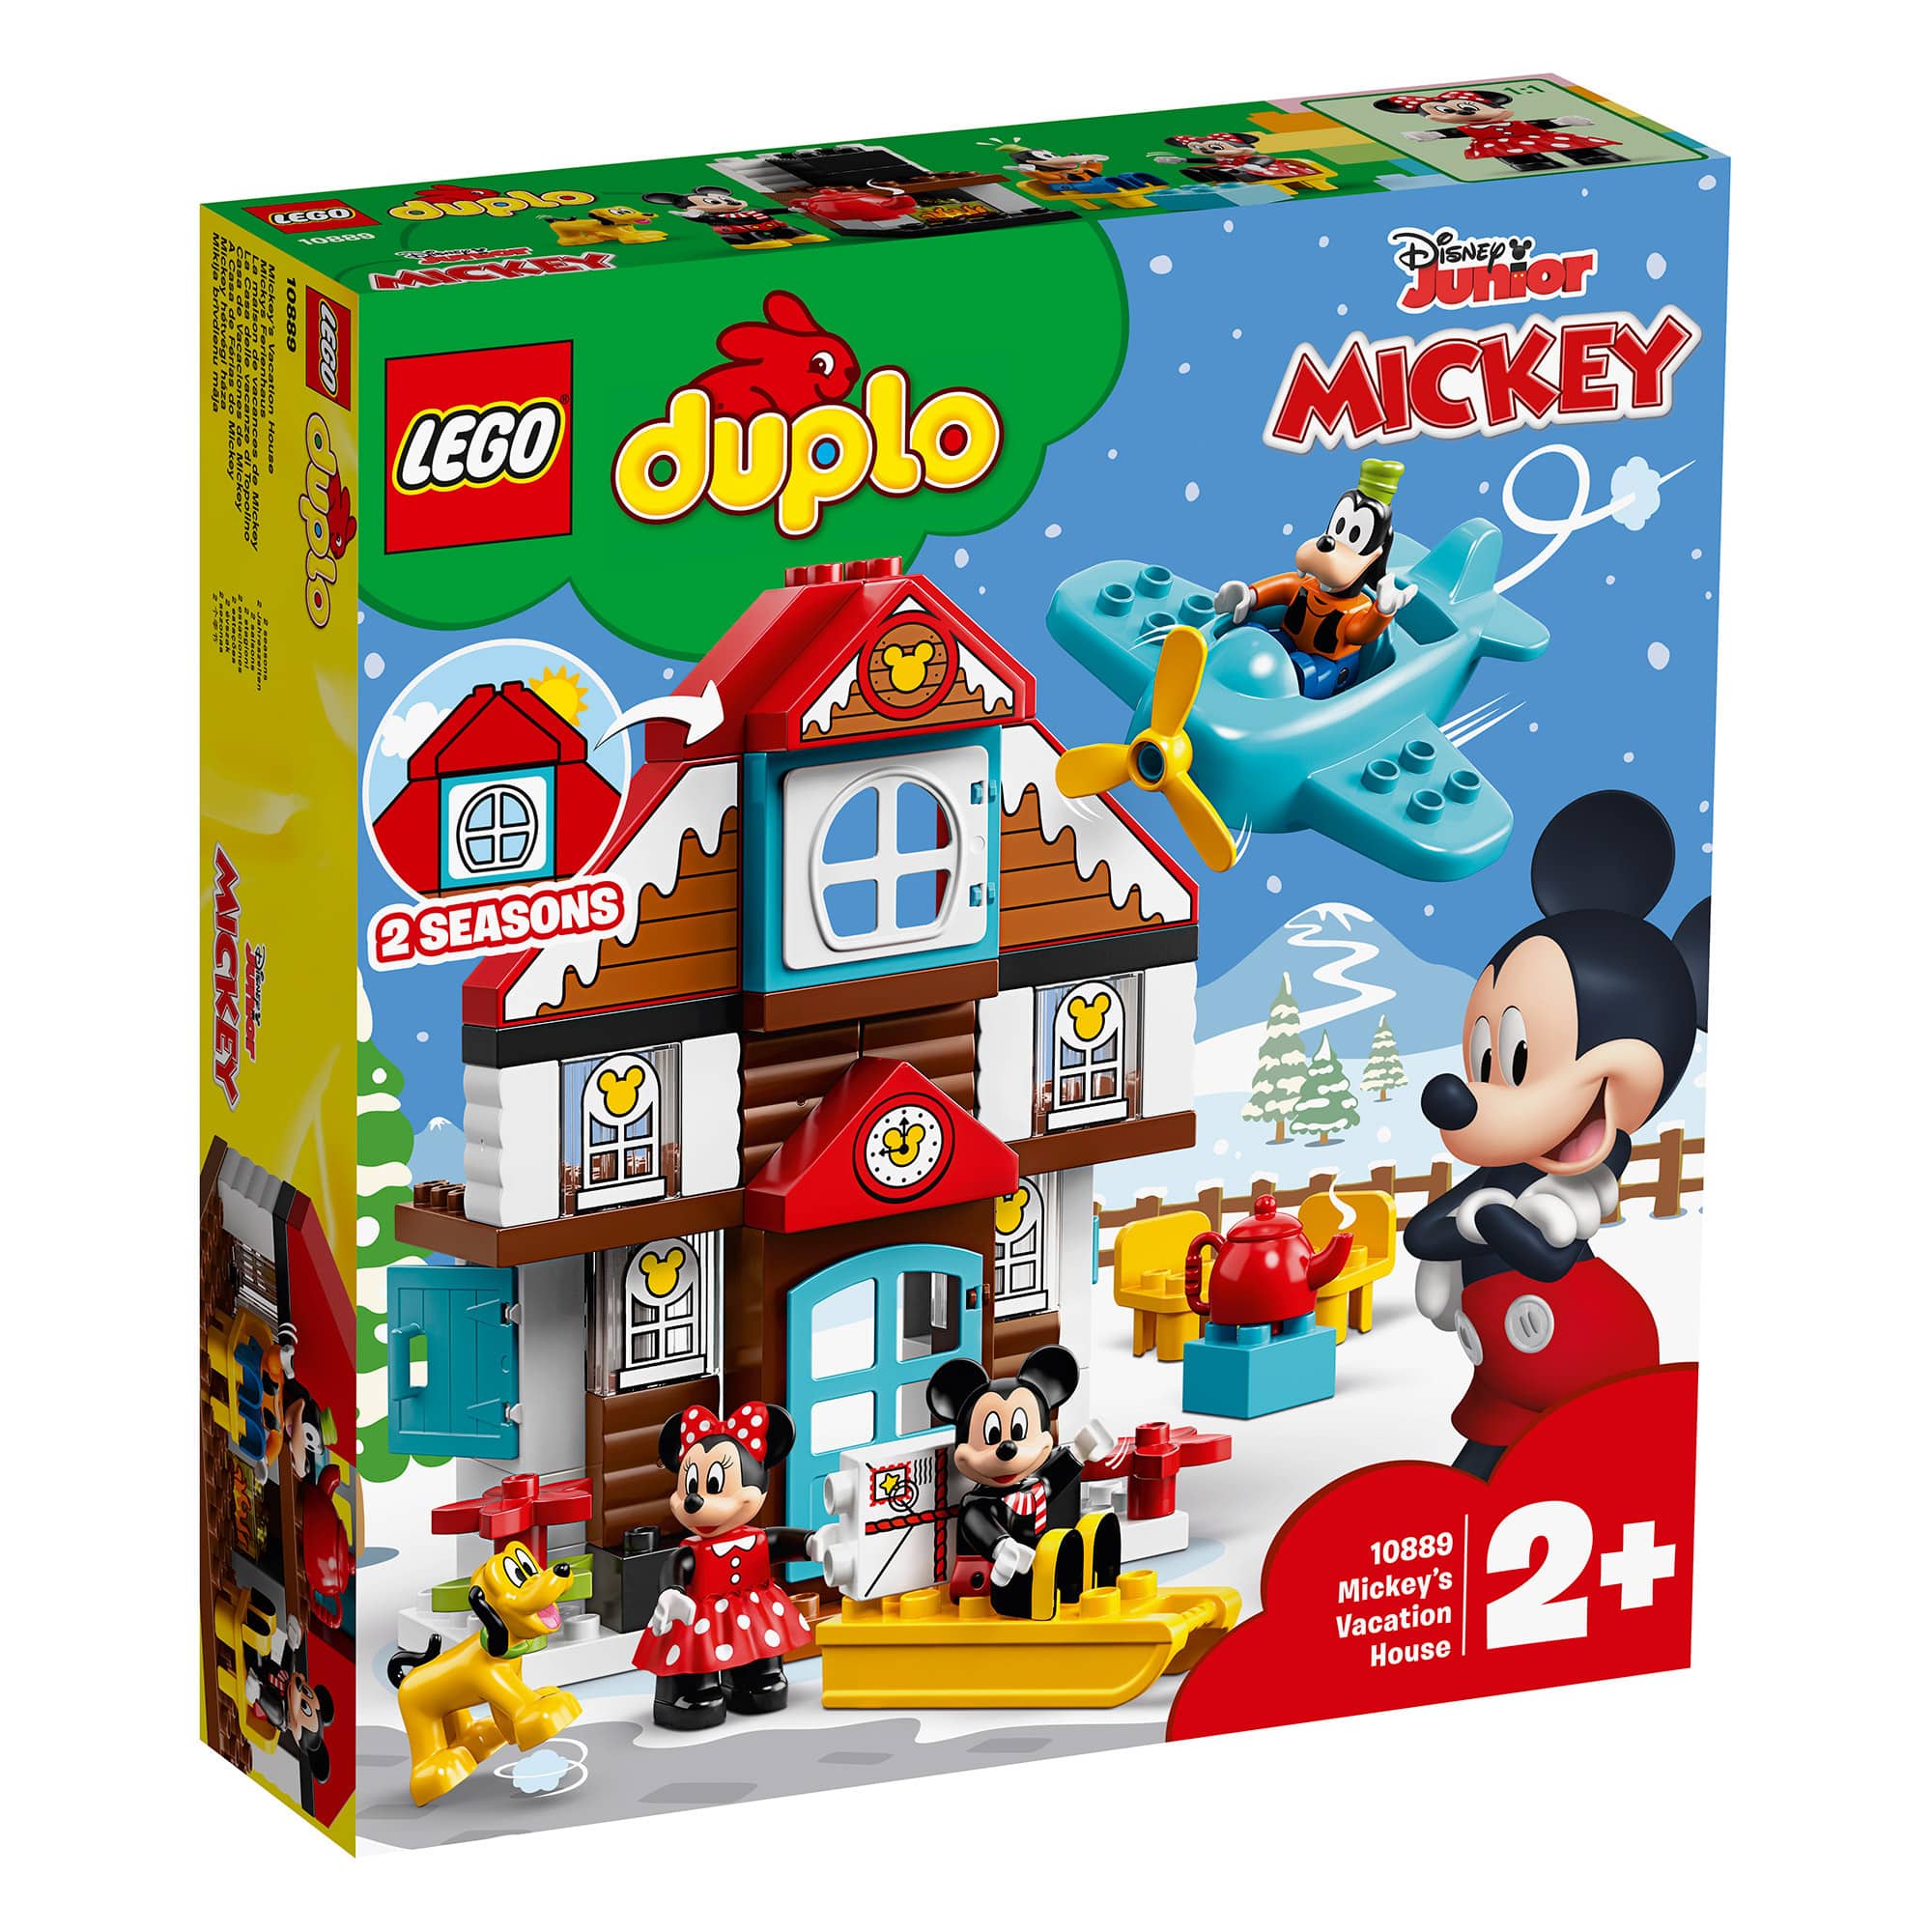 LEGO Duplo 10889 - Mickey's Vacation House